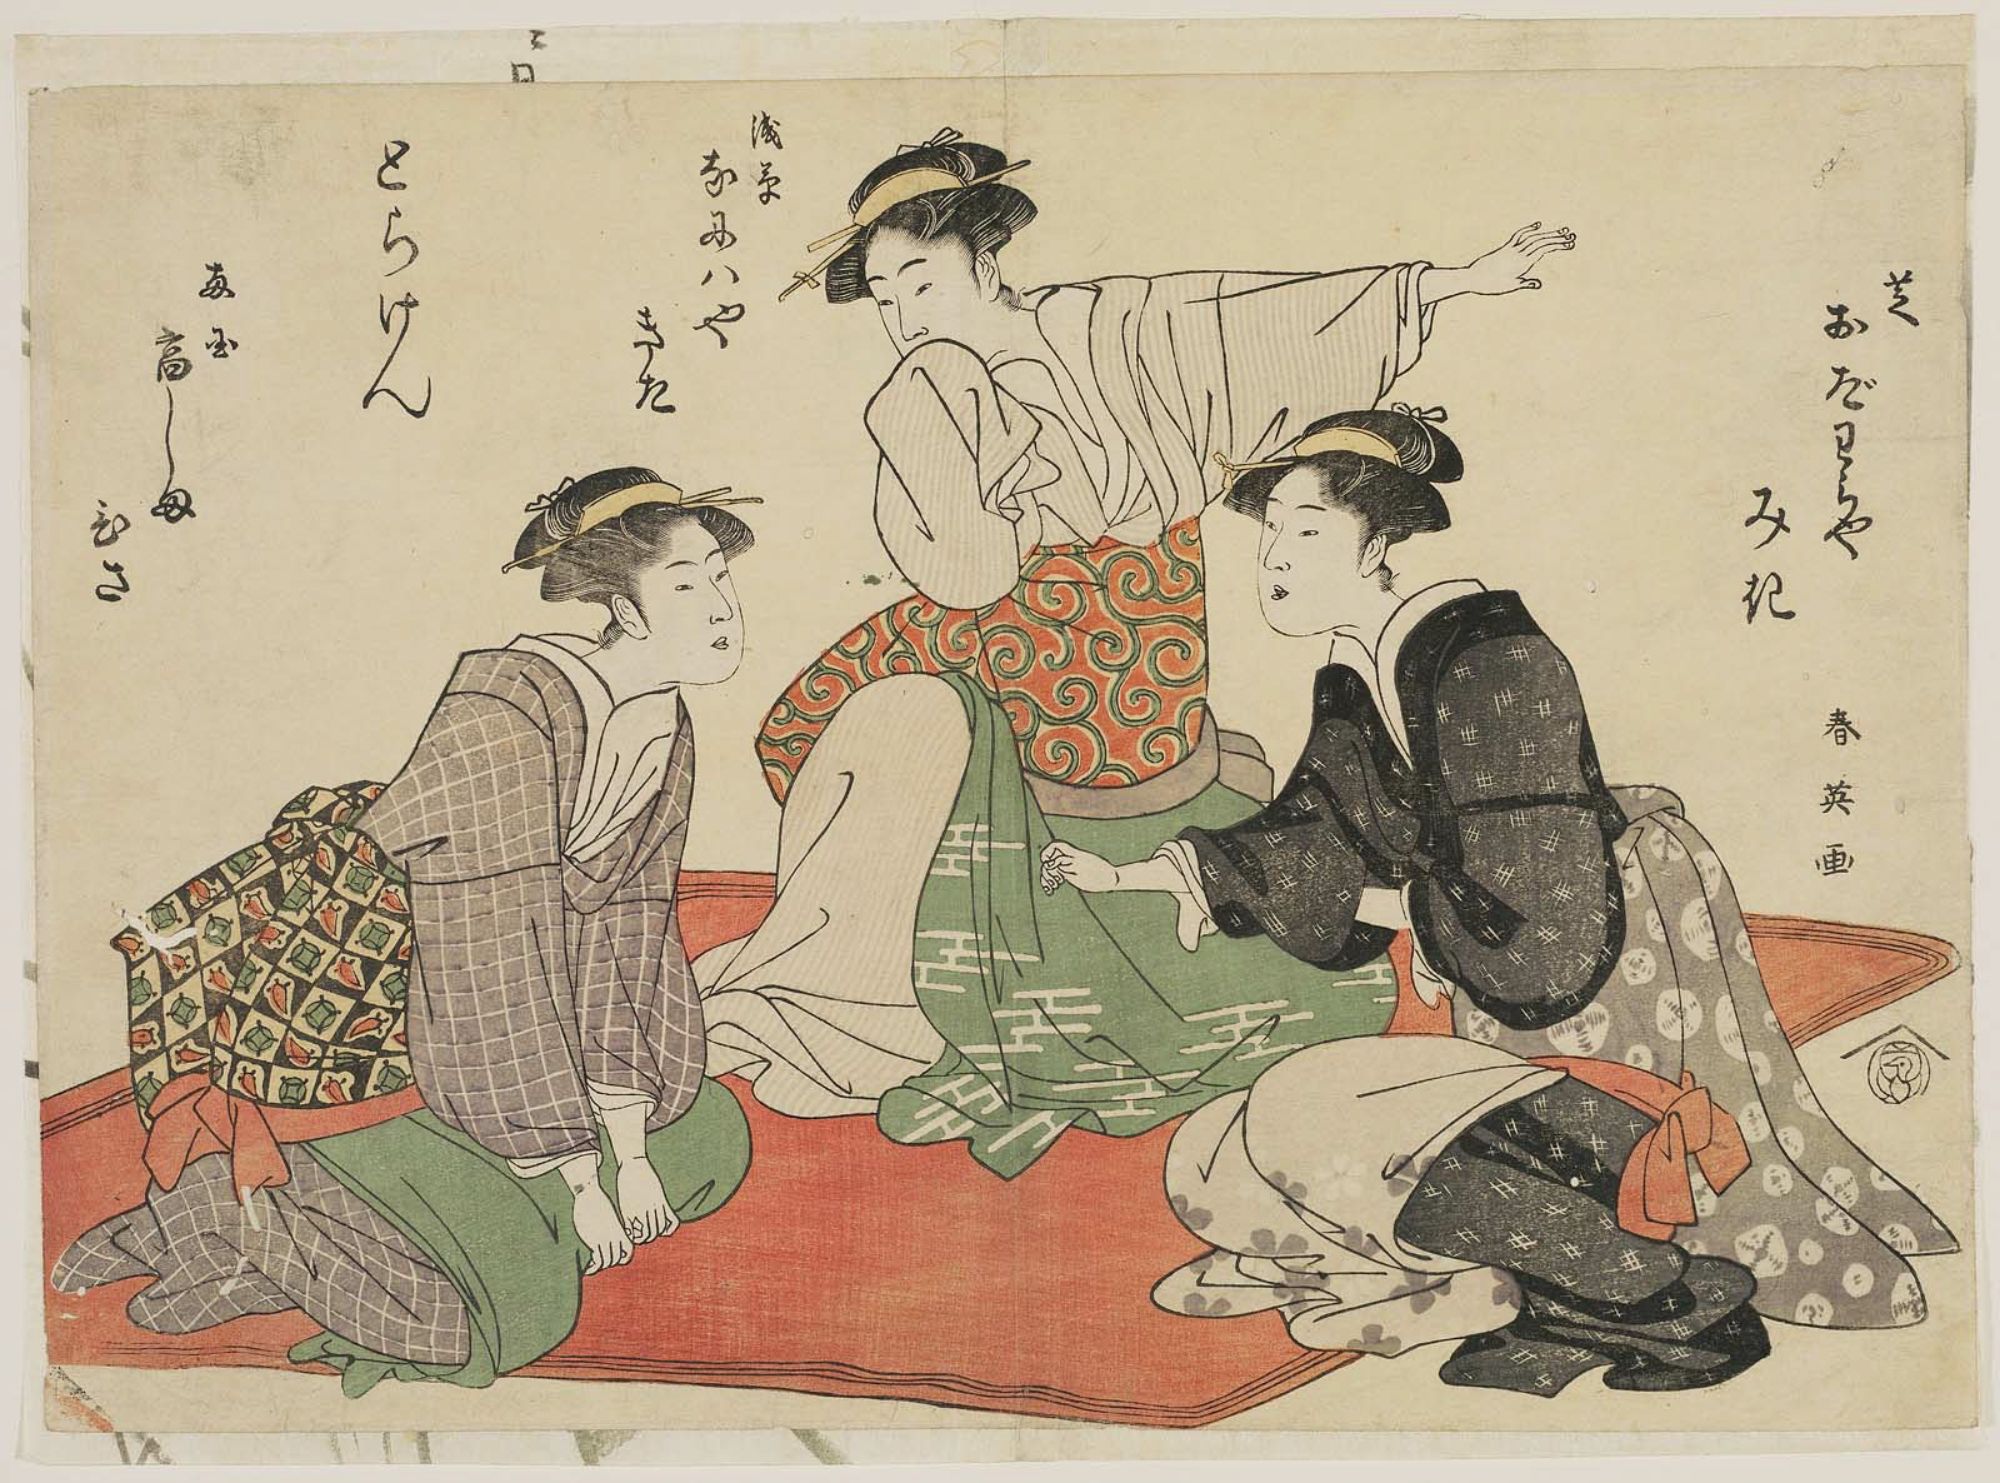 https://data.ukiyo-e.org/mfa/images/sc215112.jpg